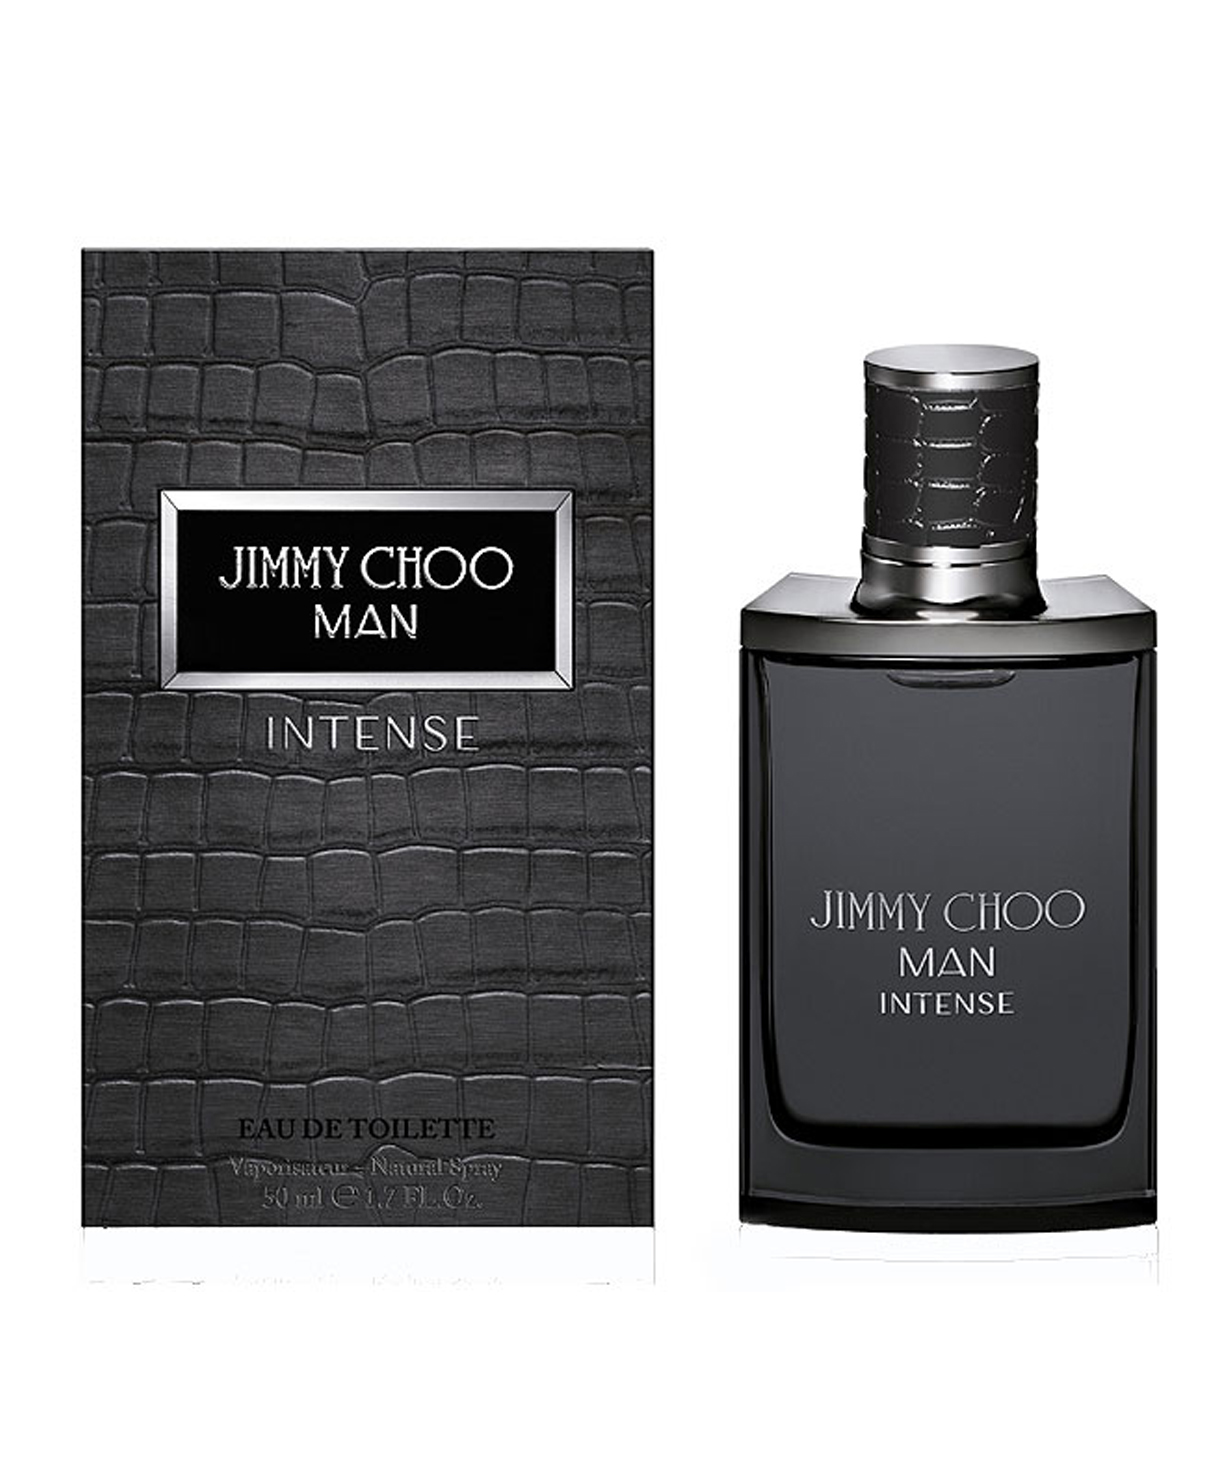 Perfume «Jimmy Choo» Intense, for men, 50 ml